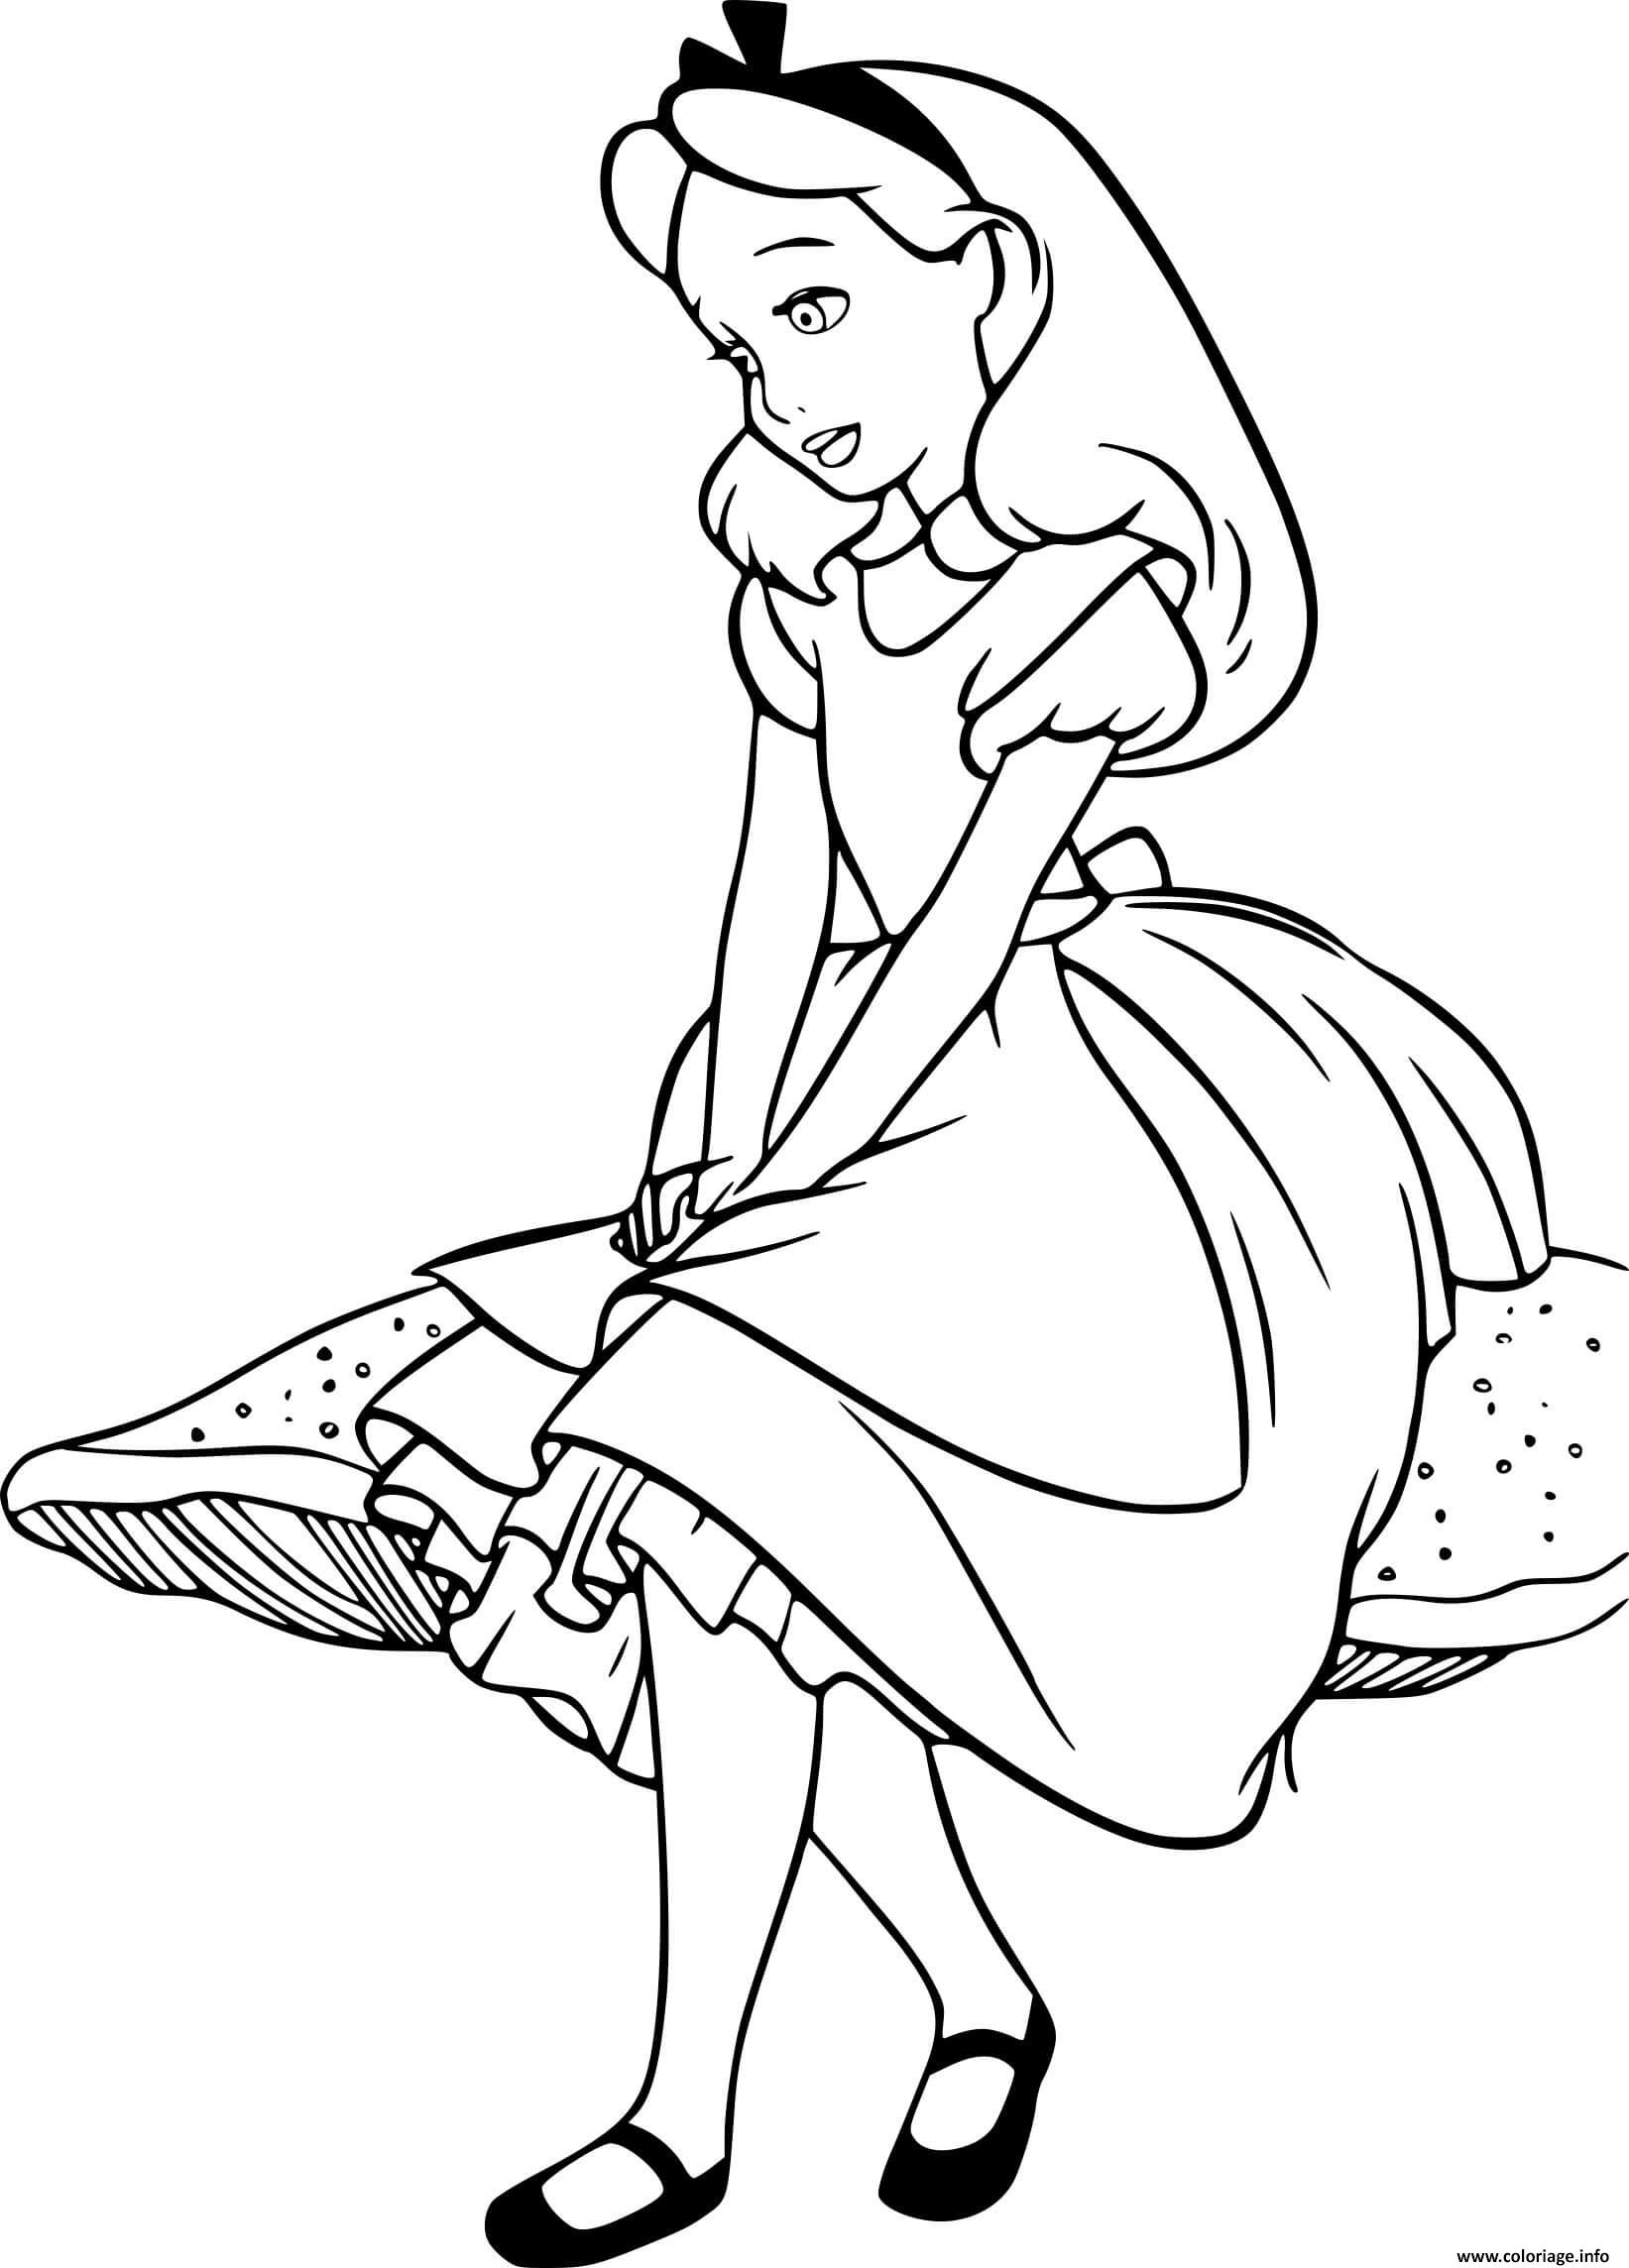 Dessin Alice Adventures in Wonderland Coloriage Gratuit à Imprimer